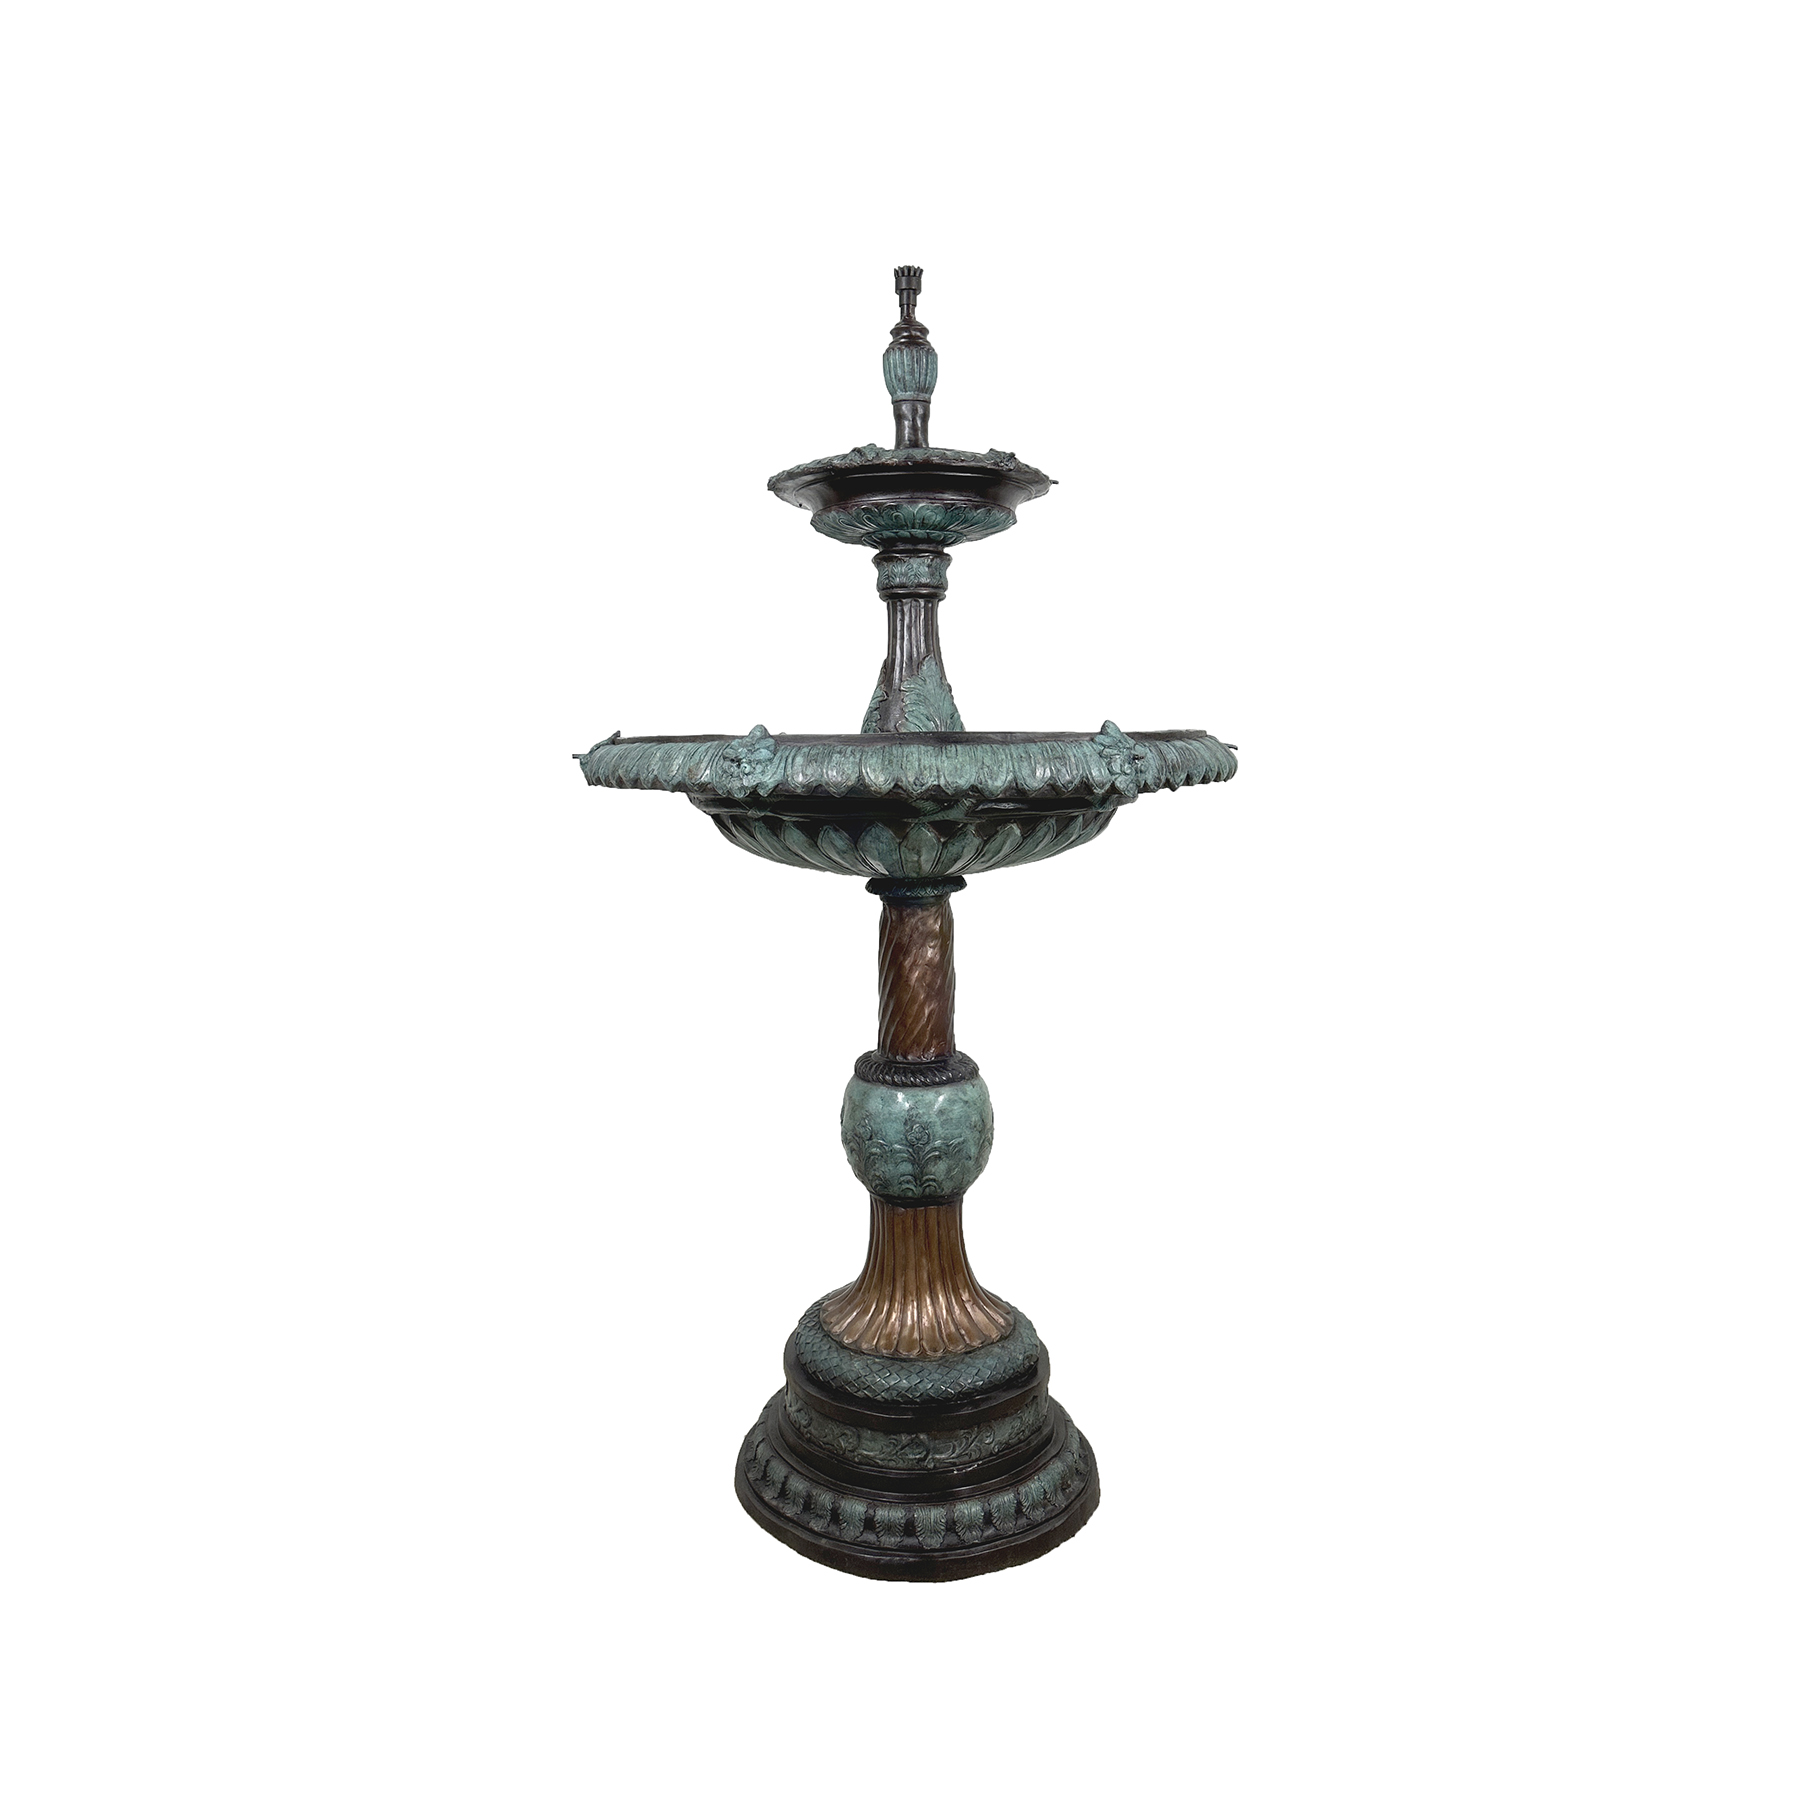 SRB018083-BG Bronze Classical Leaf Tier Fountain in Brown & Green Patina by Metropolitan Galleries Inc